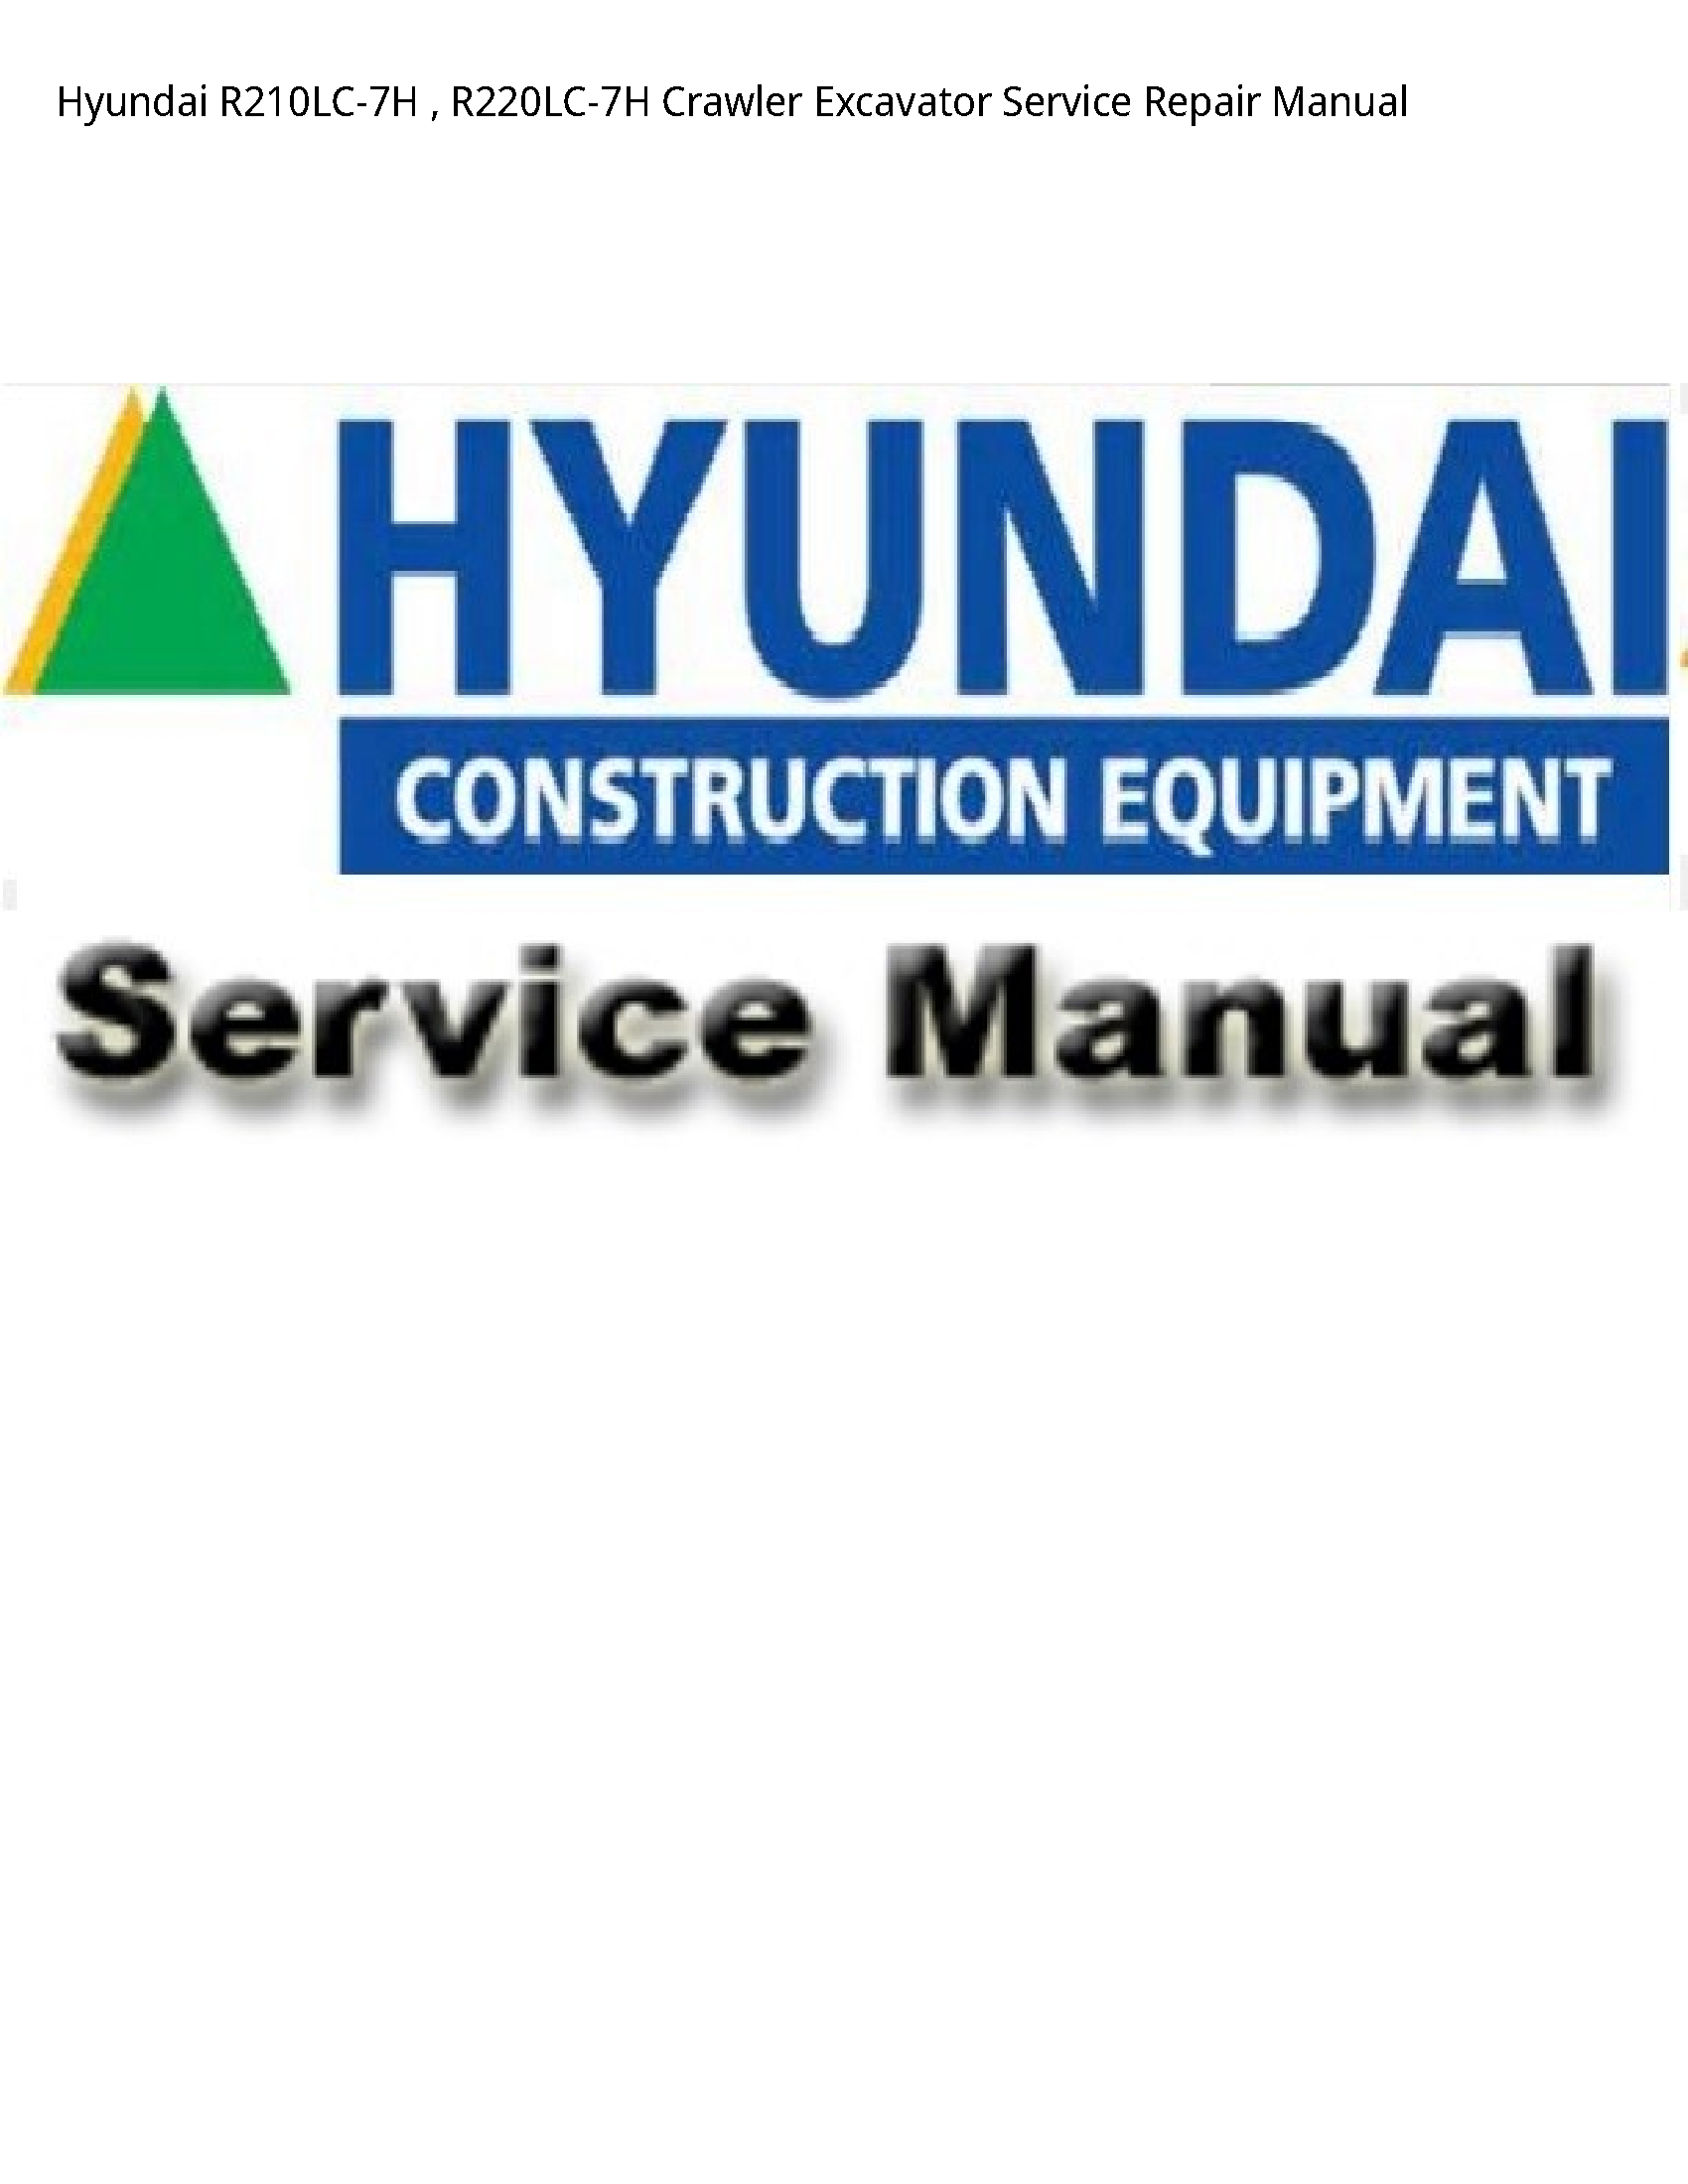 Hyundai R210LC-7H Crawler Excavator manual